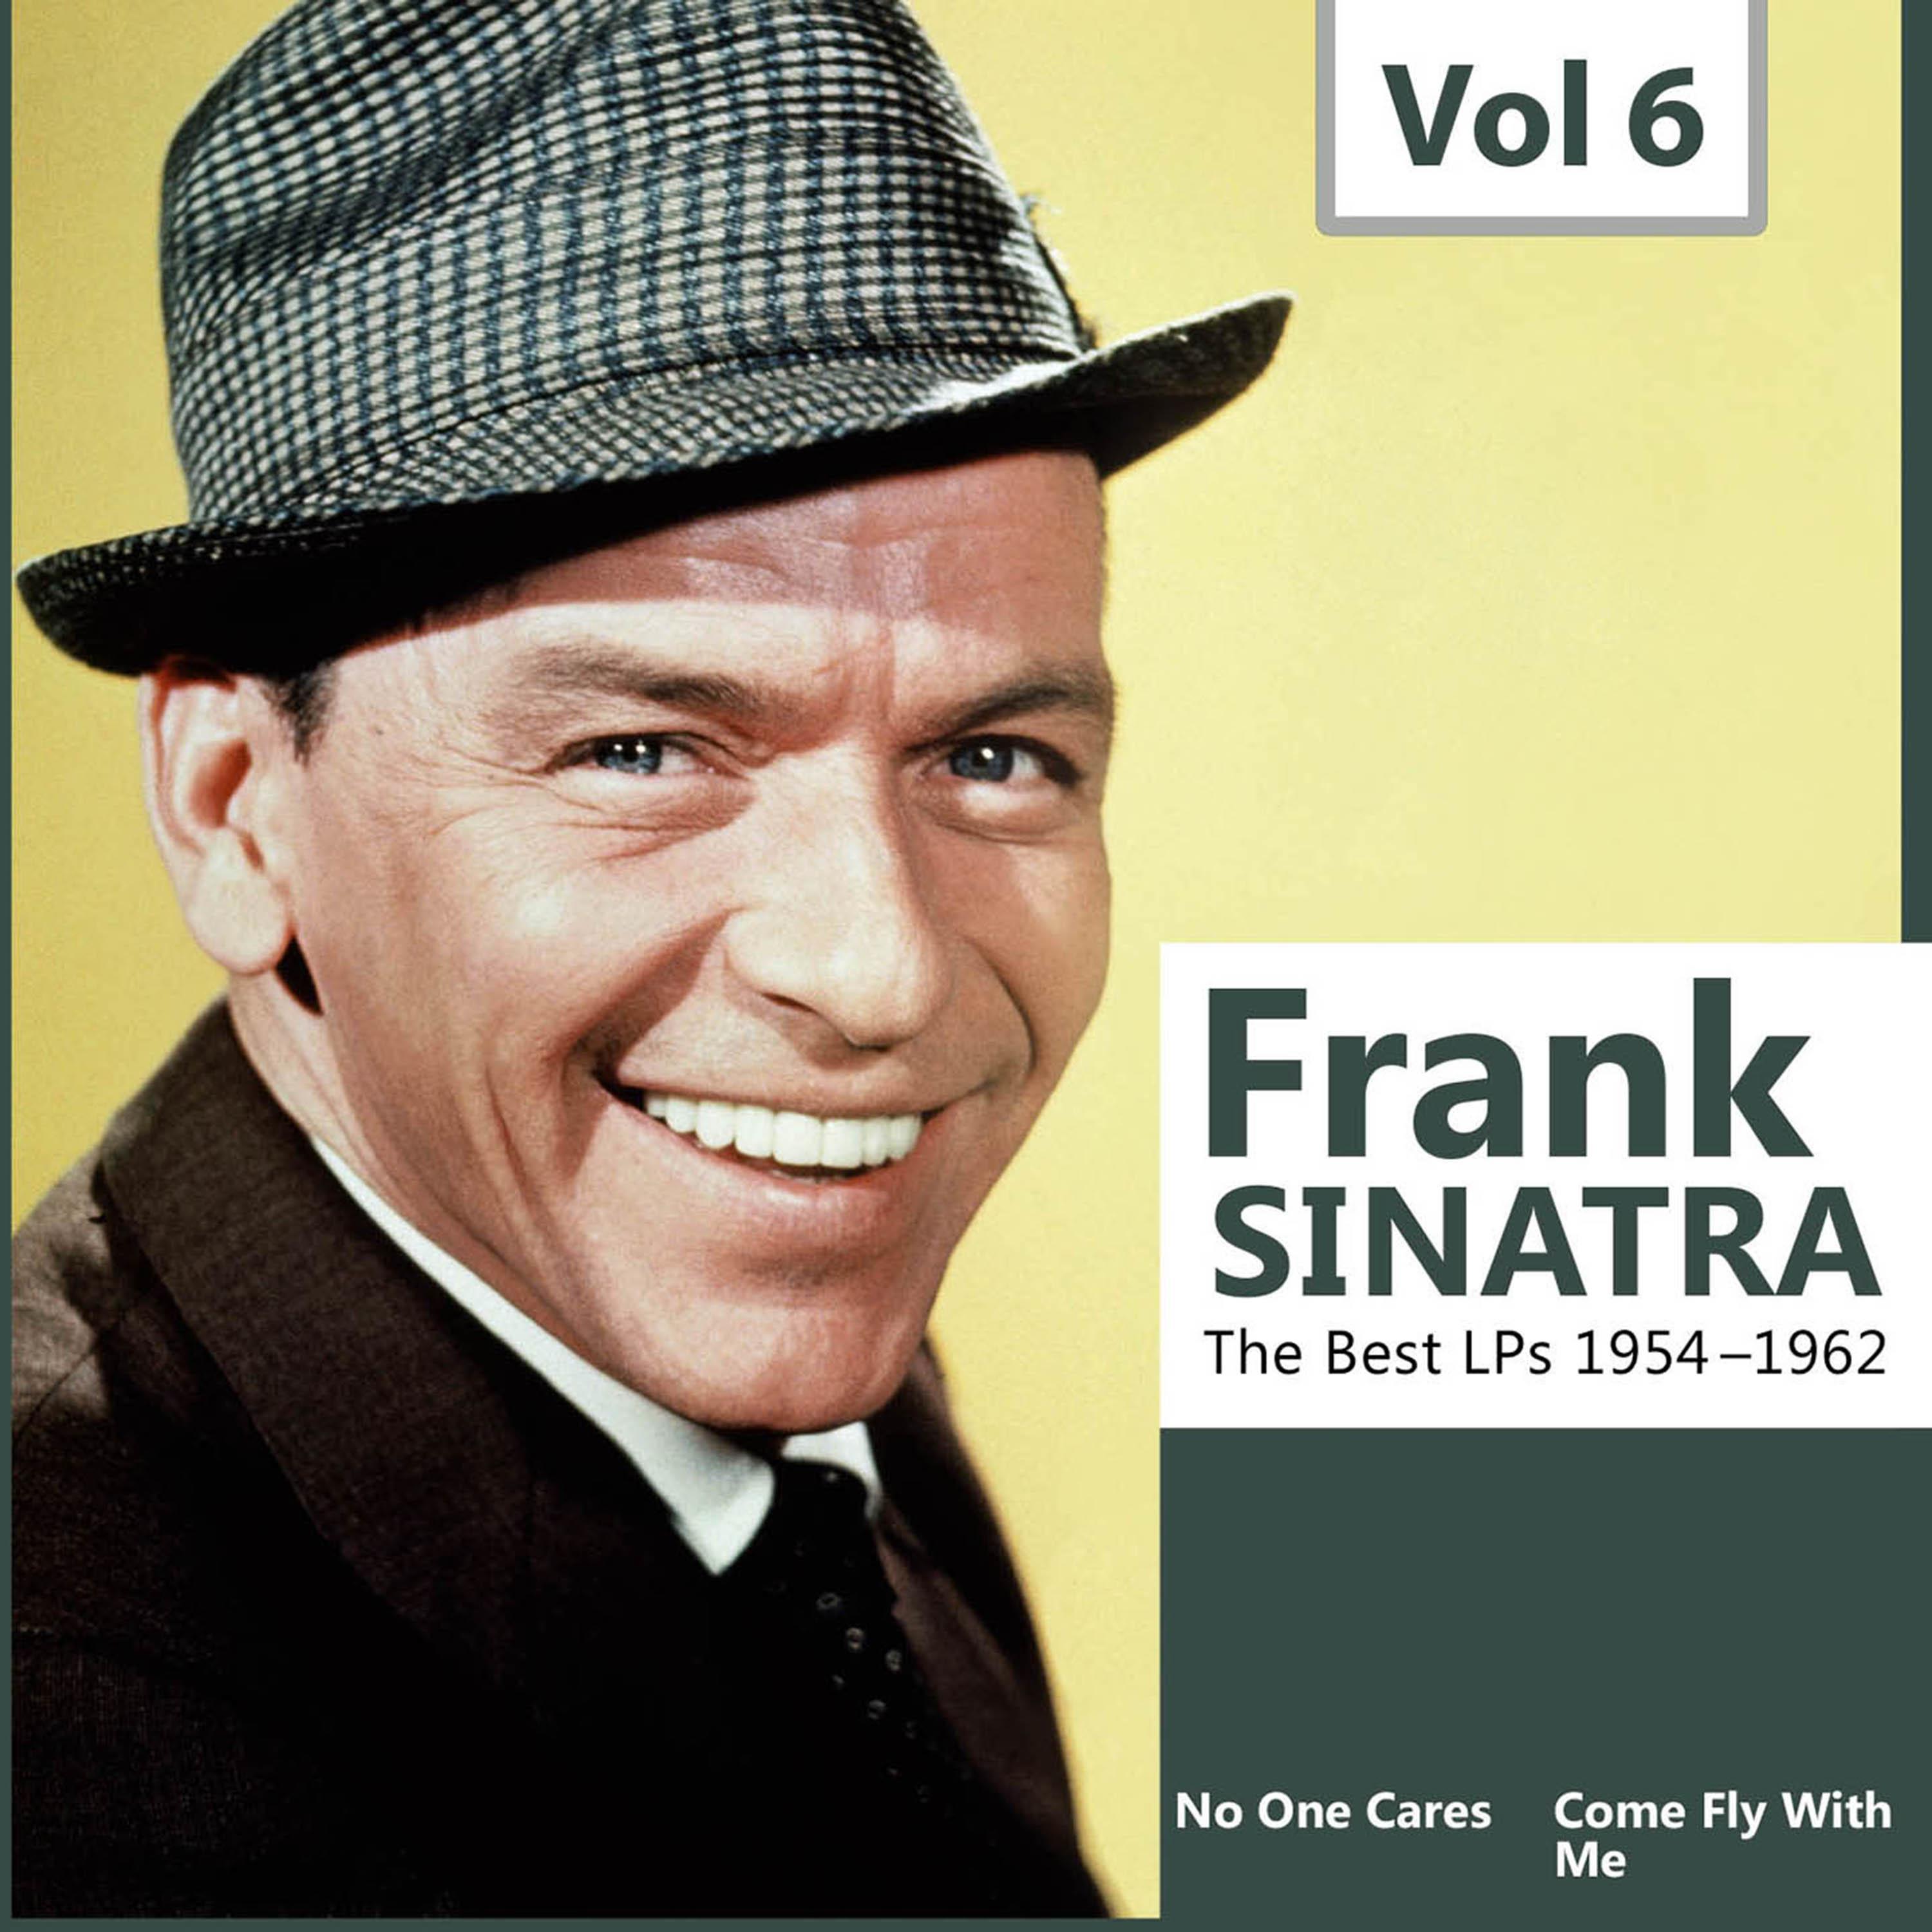 The Best Lps 1954-1962 - Frank Sinatra, Vol.6